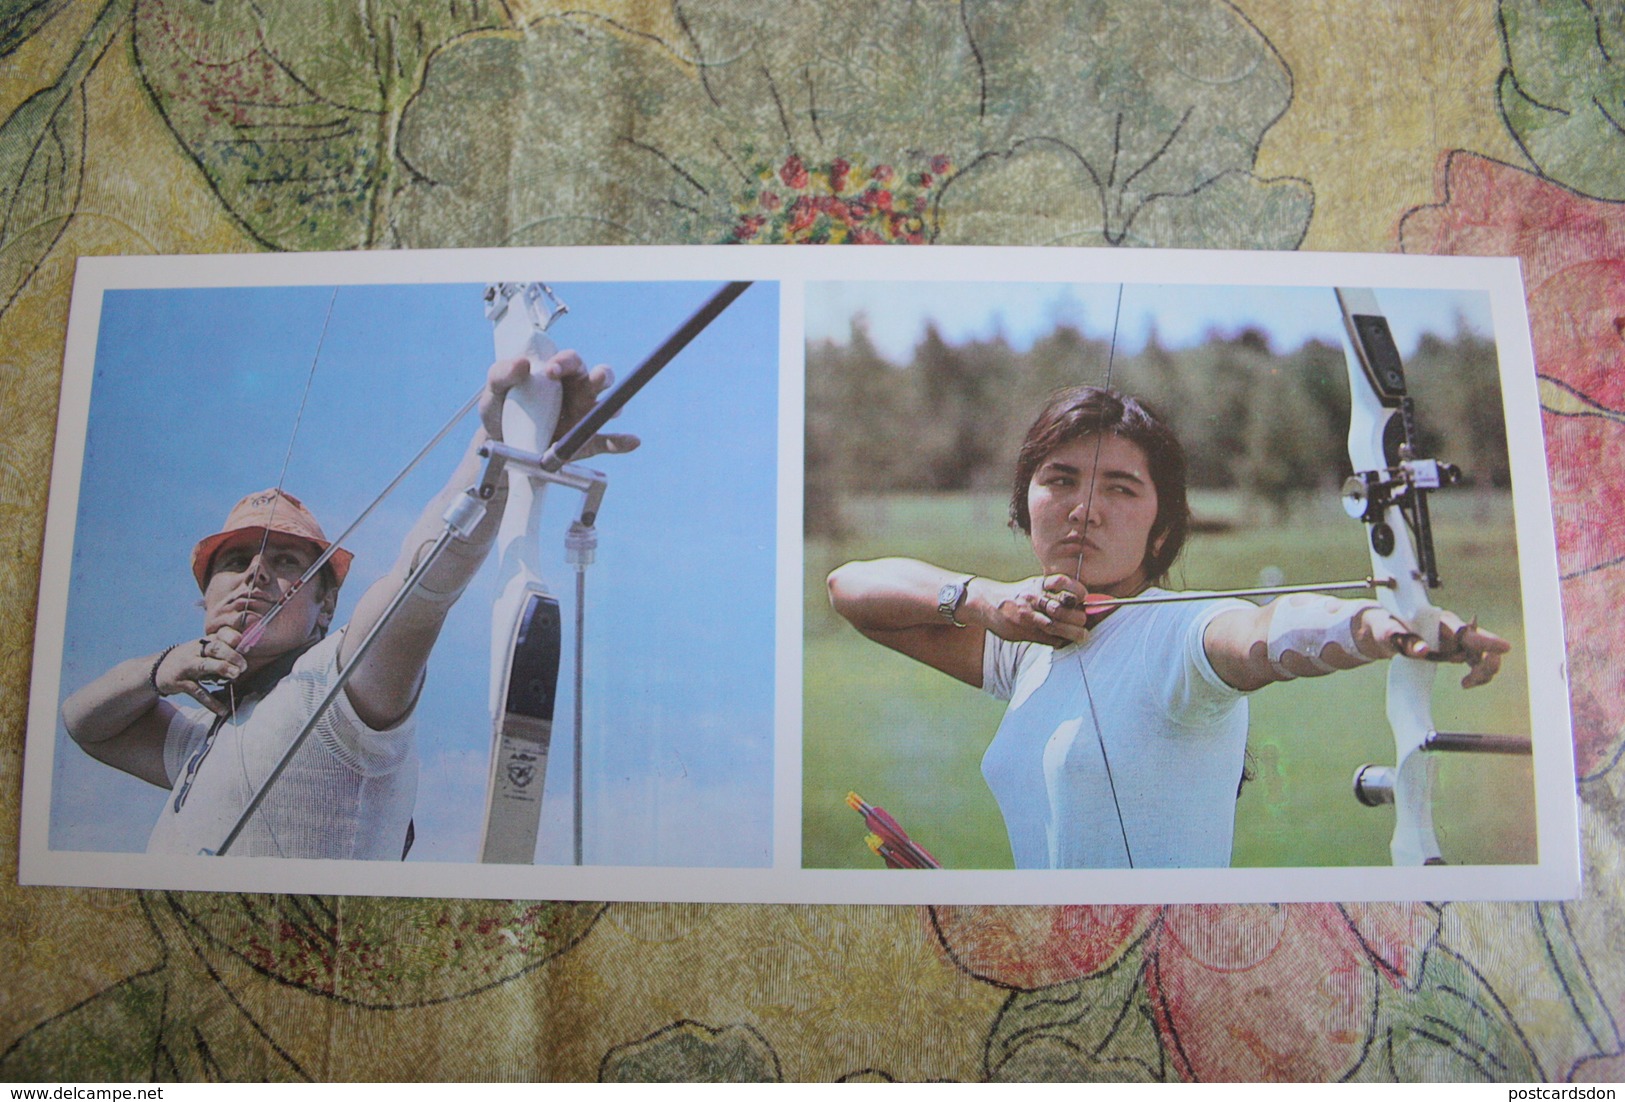 2 Items Lot - Old Postcard And Old Original Photo - ARCHERY - Archer - USSR   -  1970s - Archery